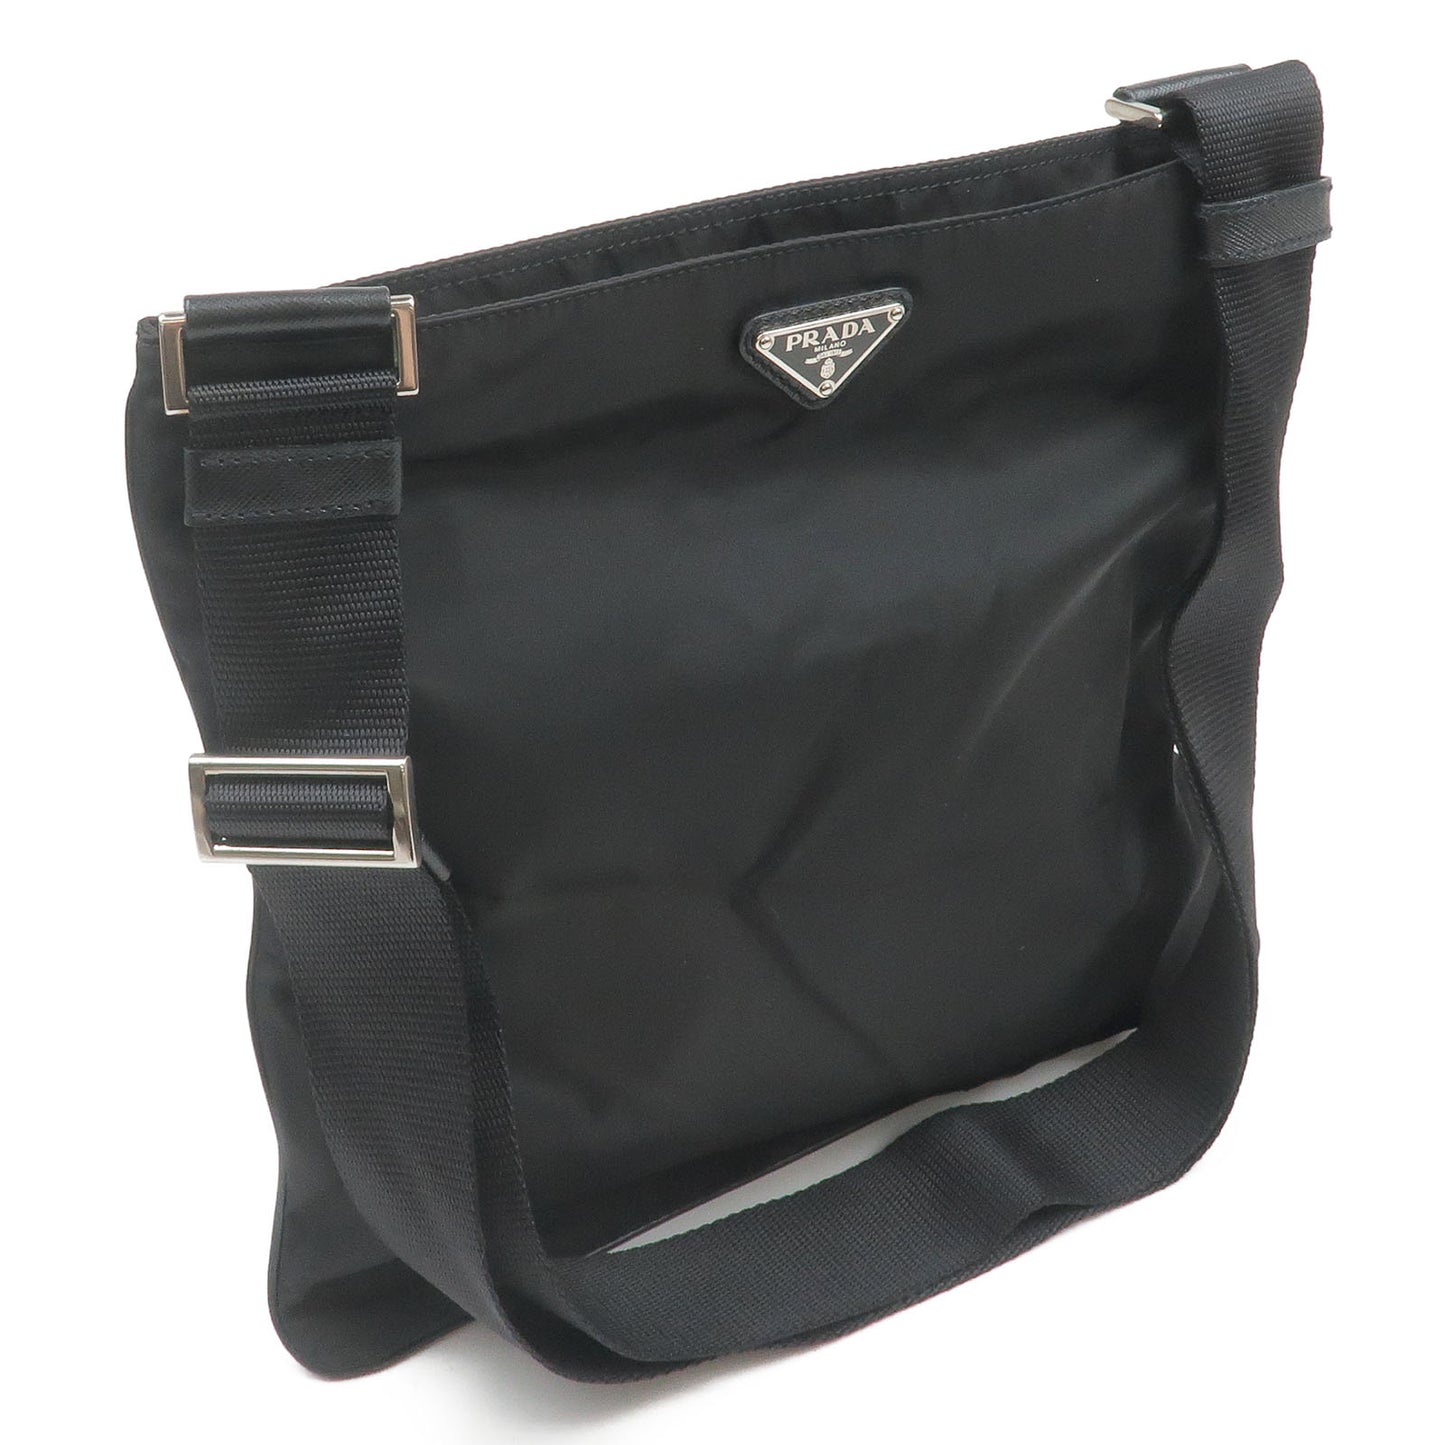 PRADA Nylon Leather Shoulder Bag Purse NERO Black VA0340